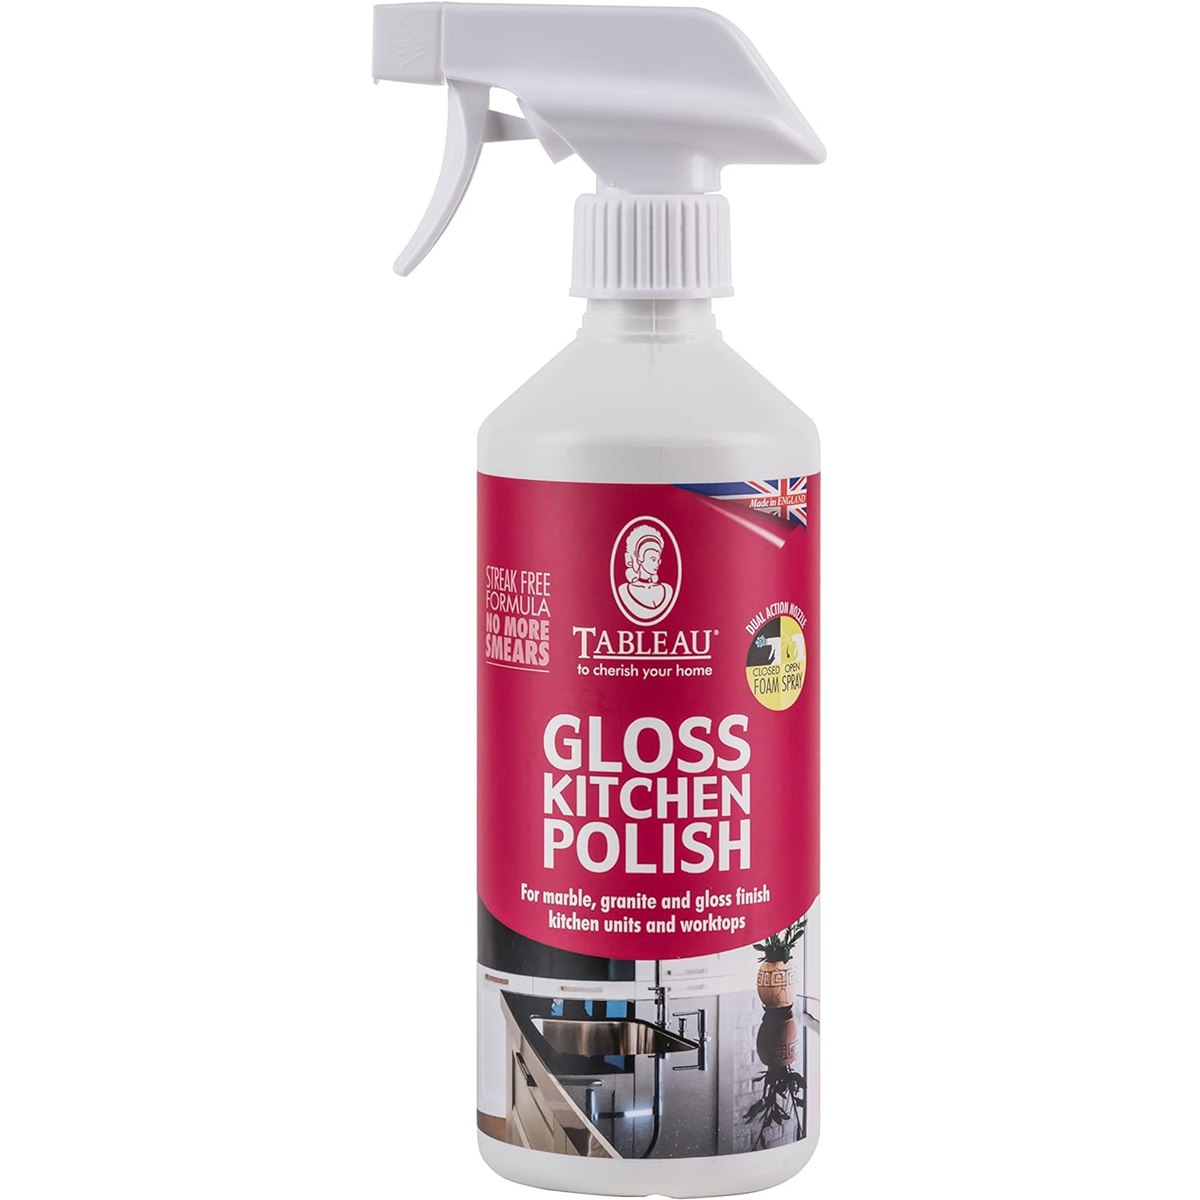 Tableau Gloss Kitchen Polish Spray